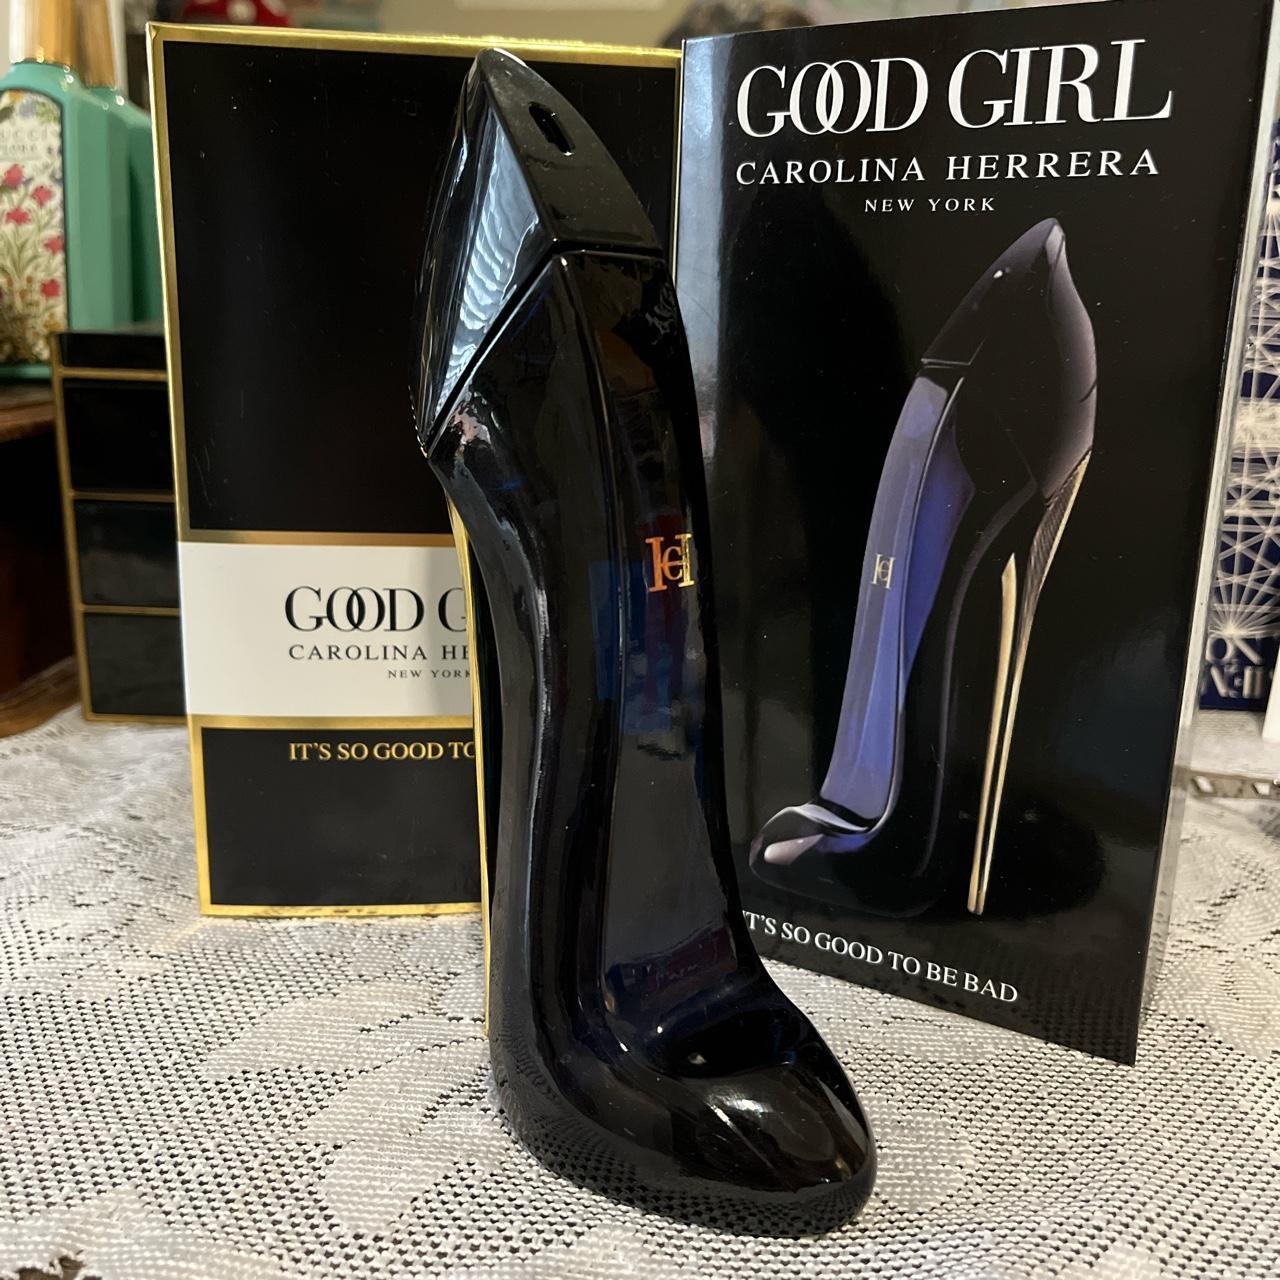 Tester Good Girl Eau de Parfum Carolina Herrera - Perfume Feminino 80 ML